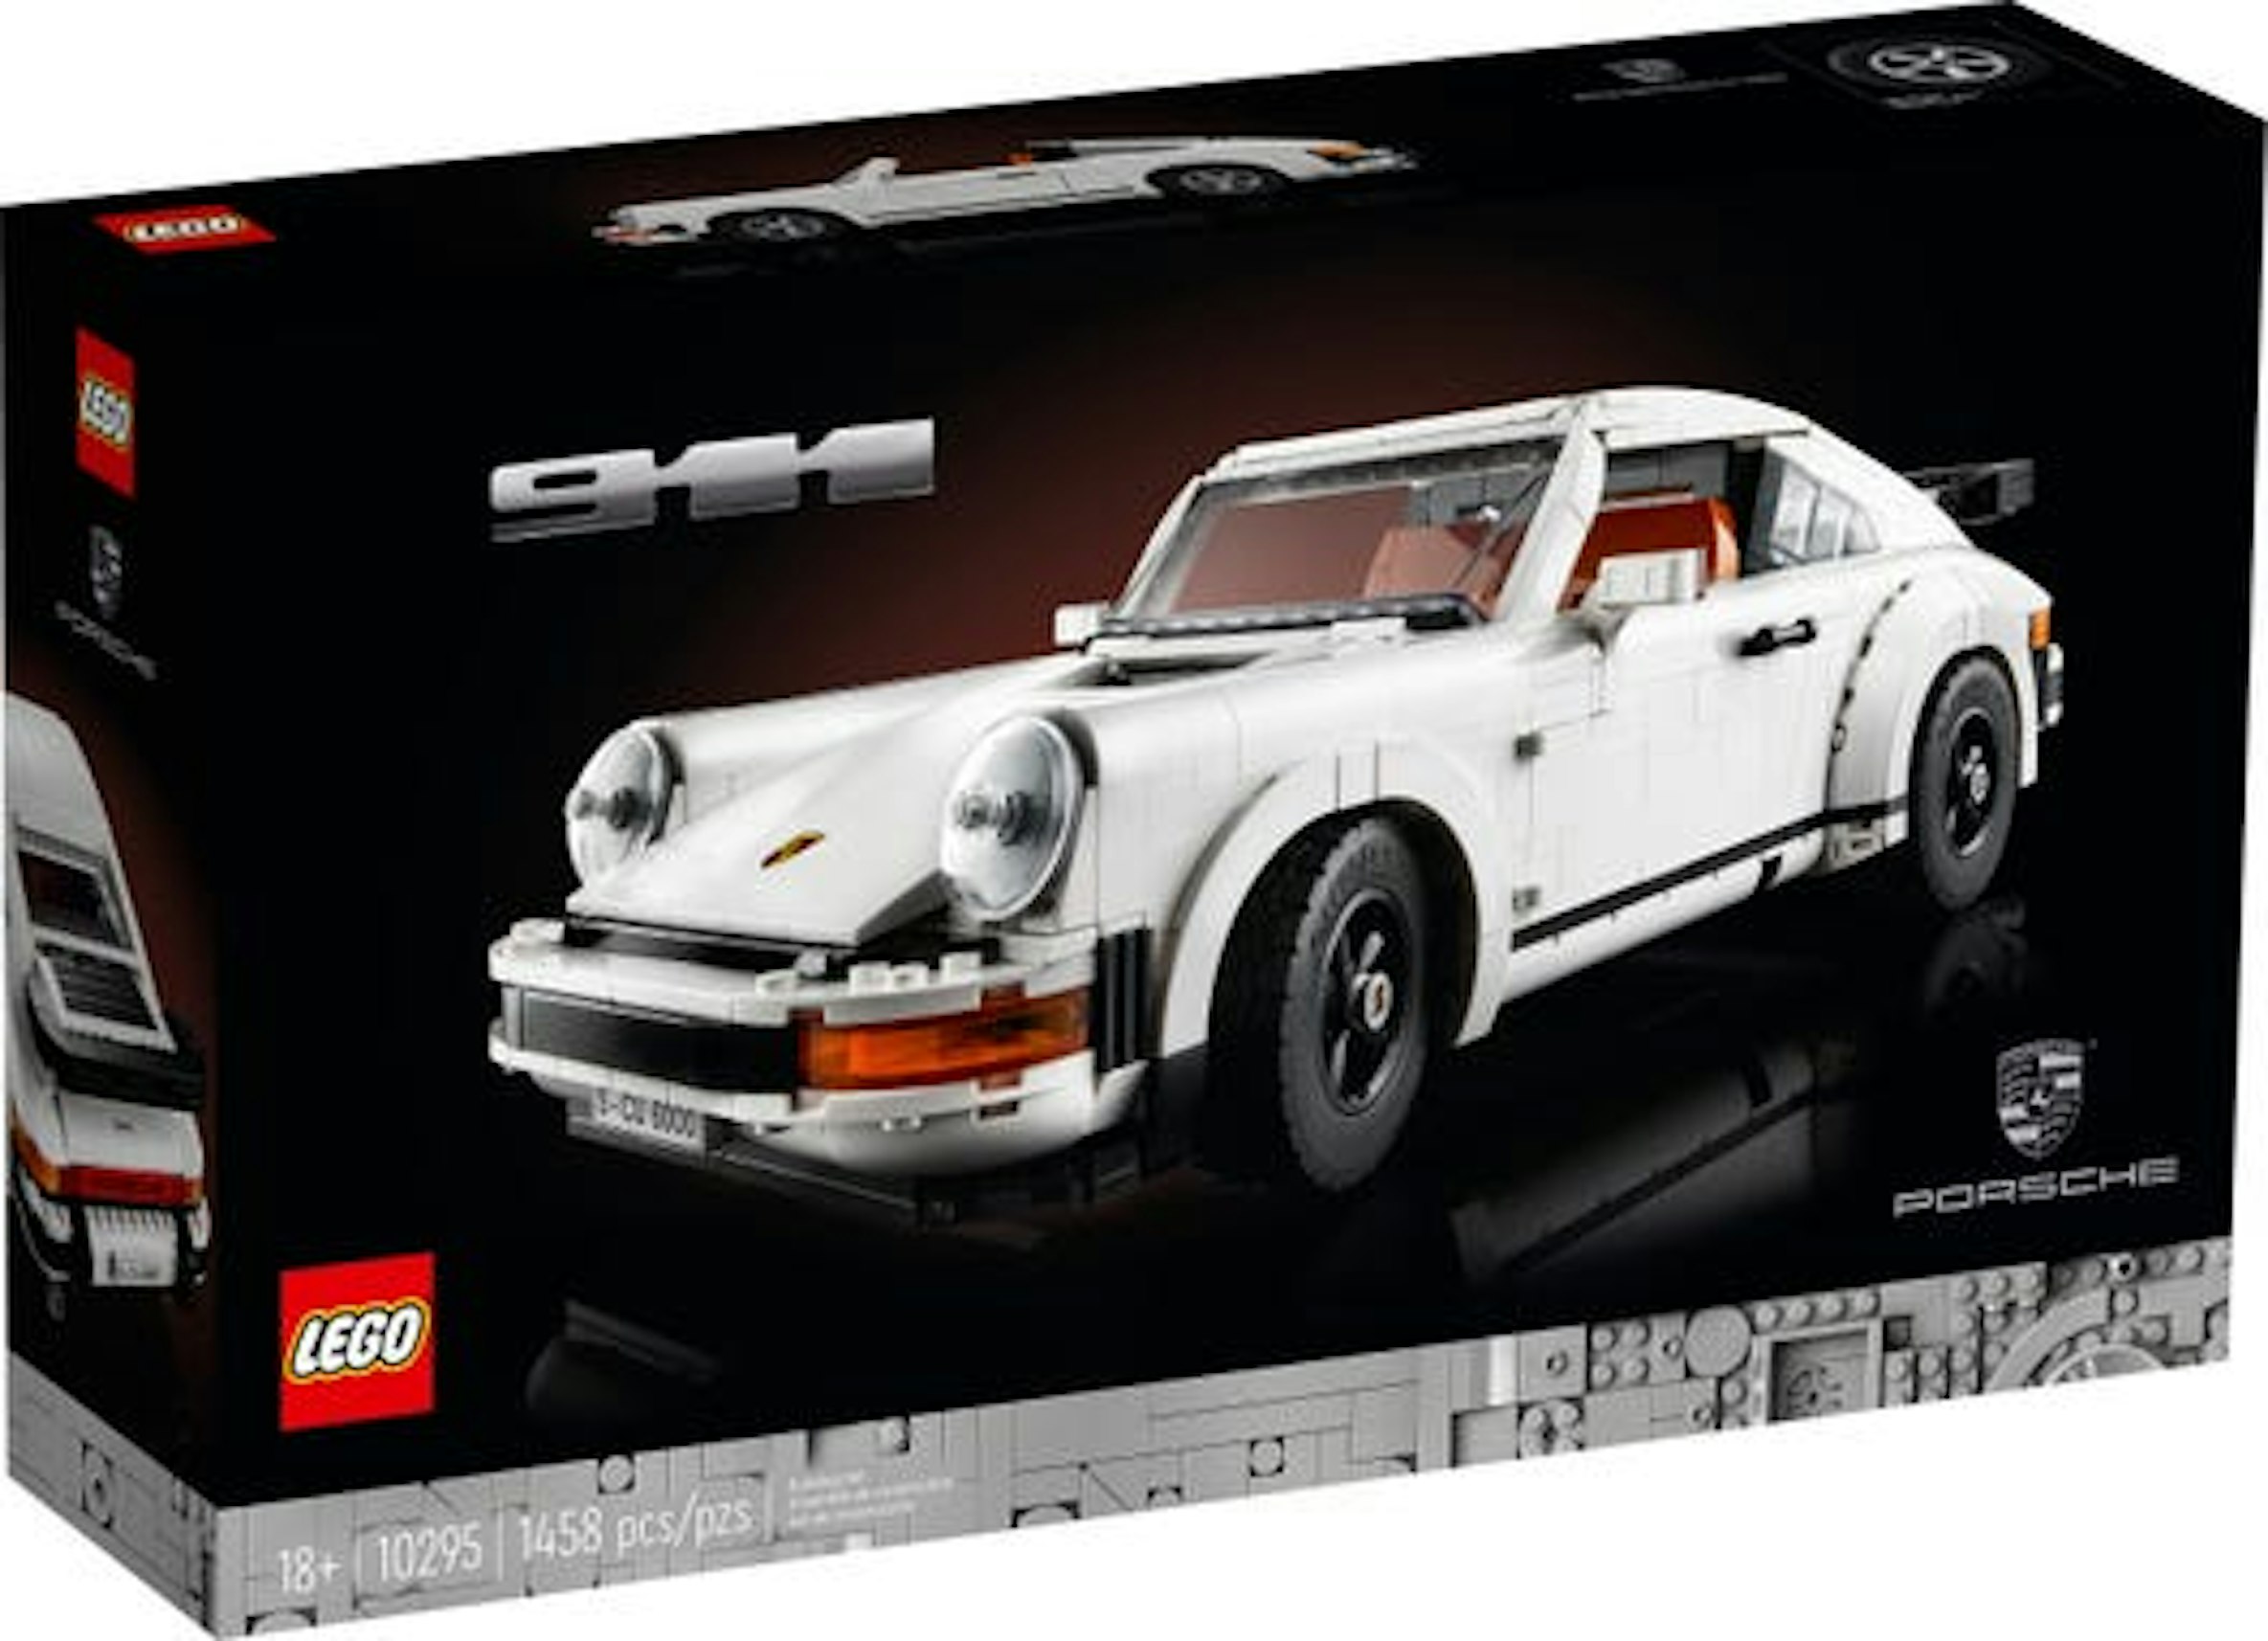 LEGO Porsche Set - US